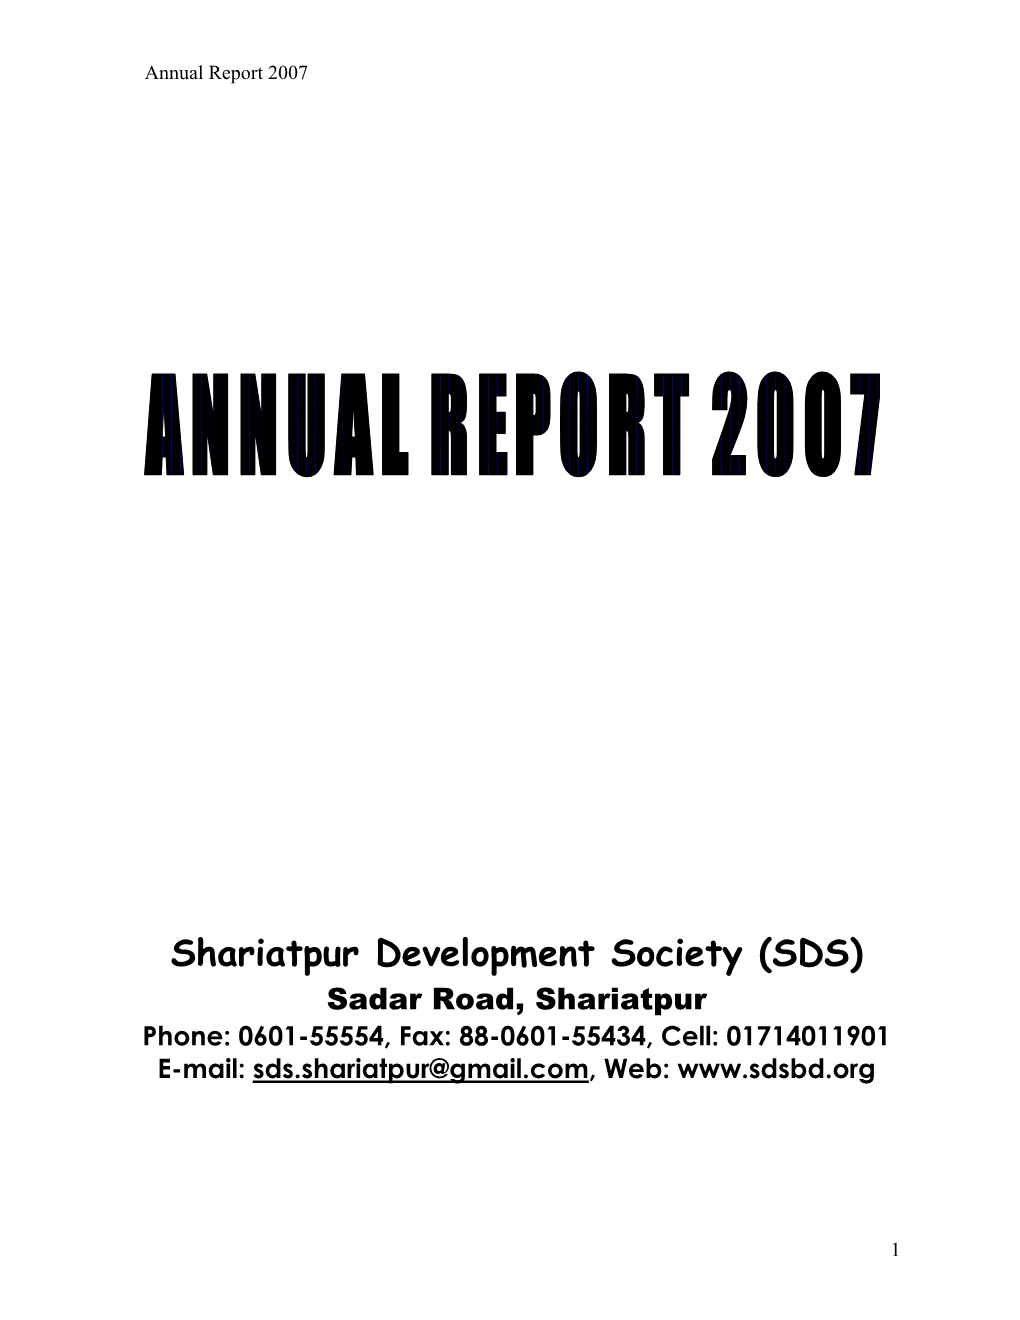 Shariatpur Development Society (SDS)